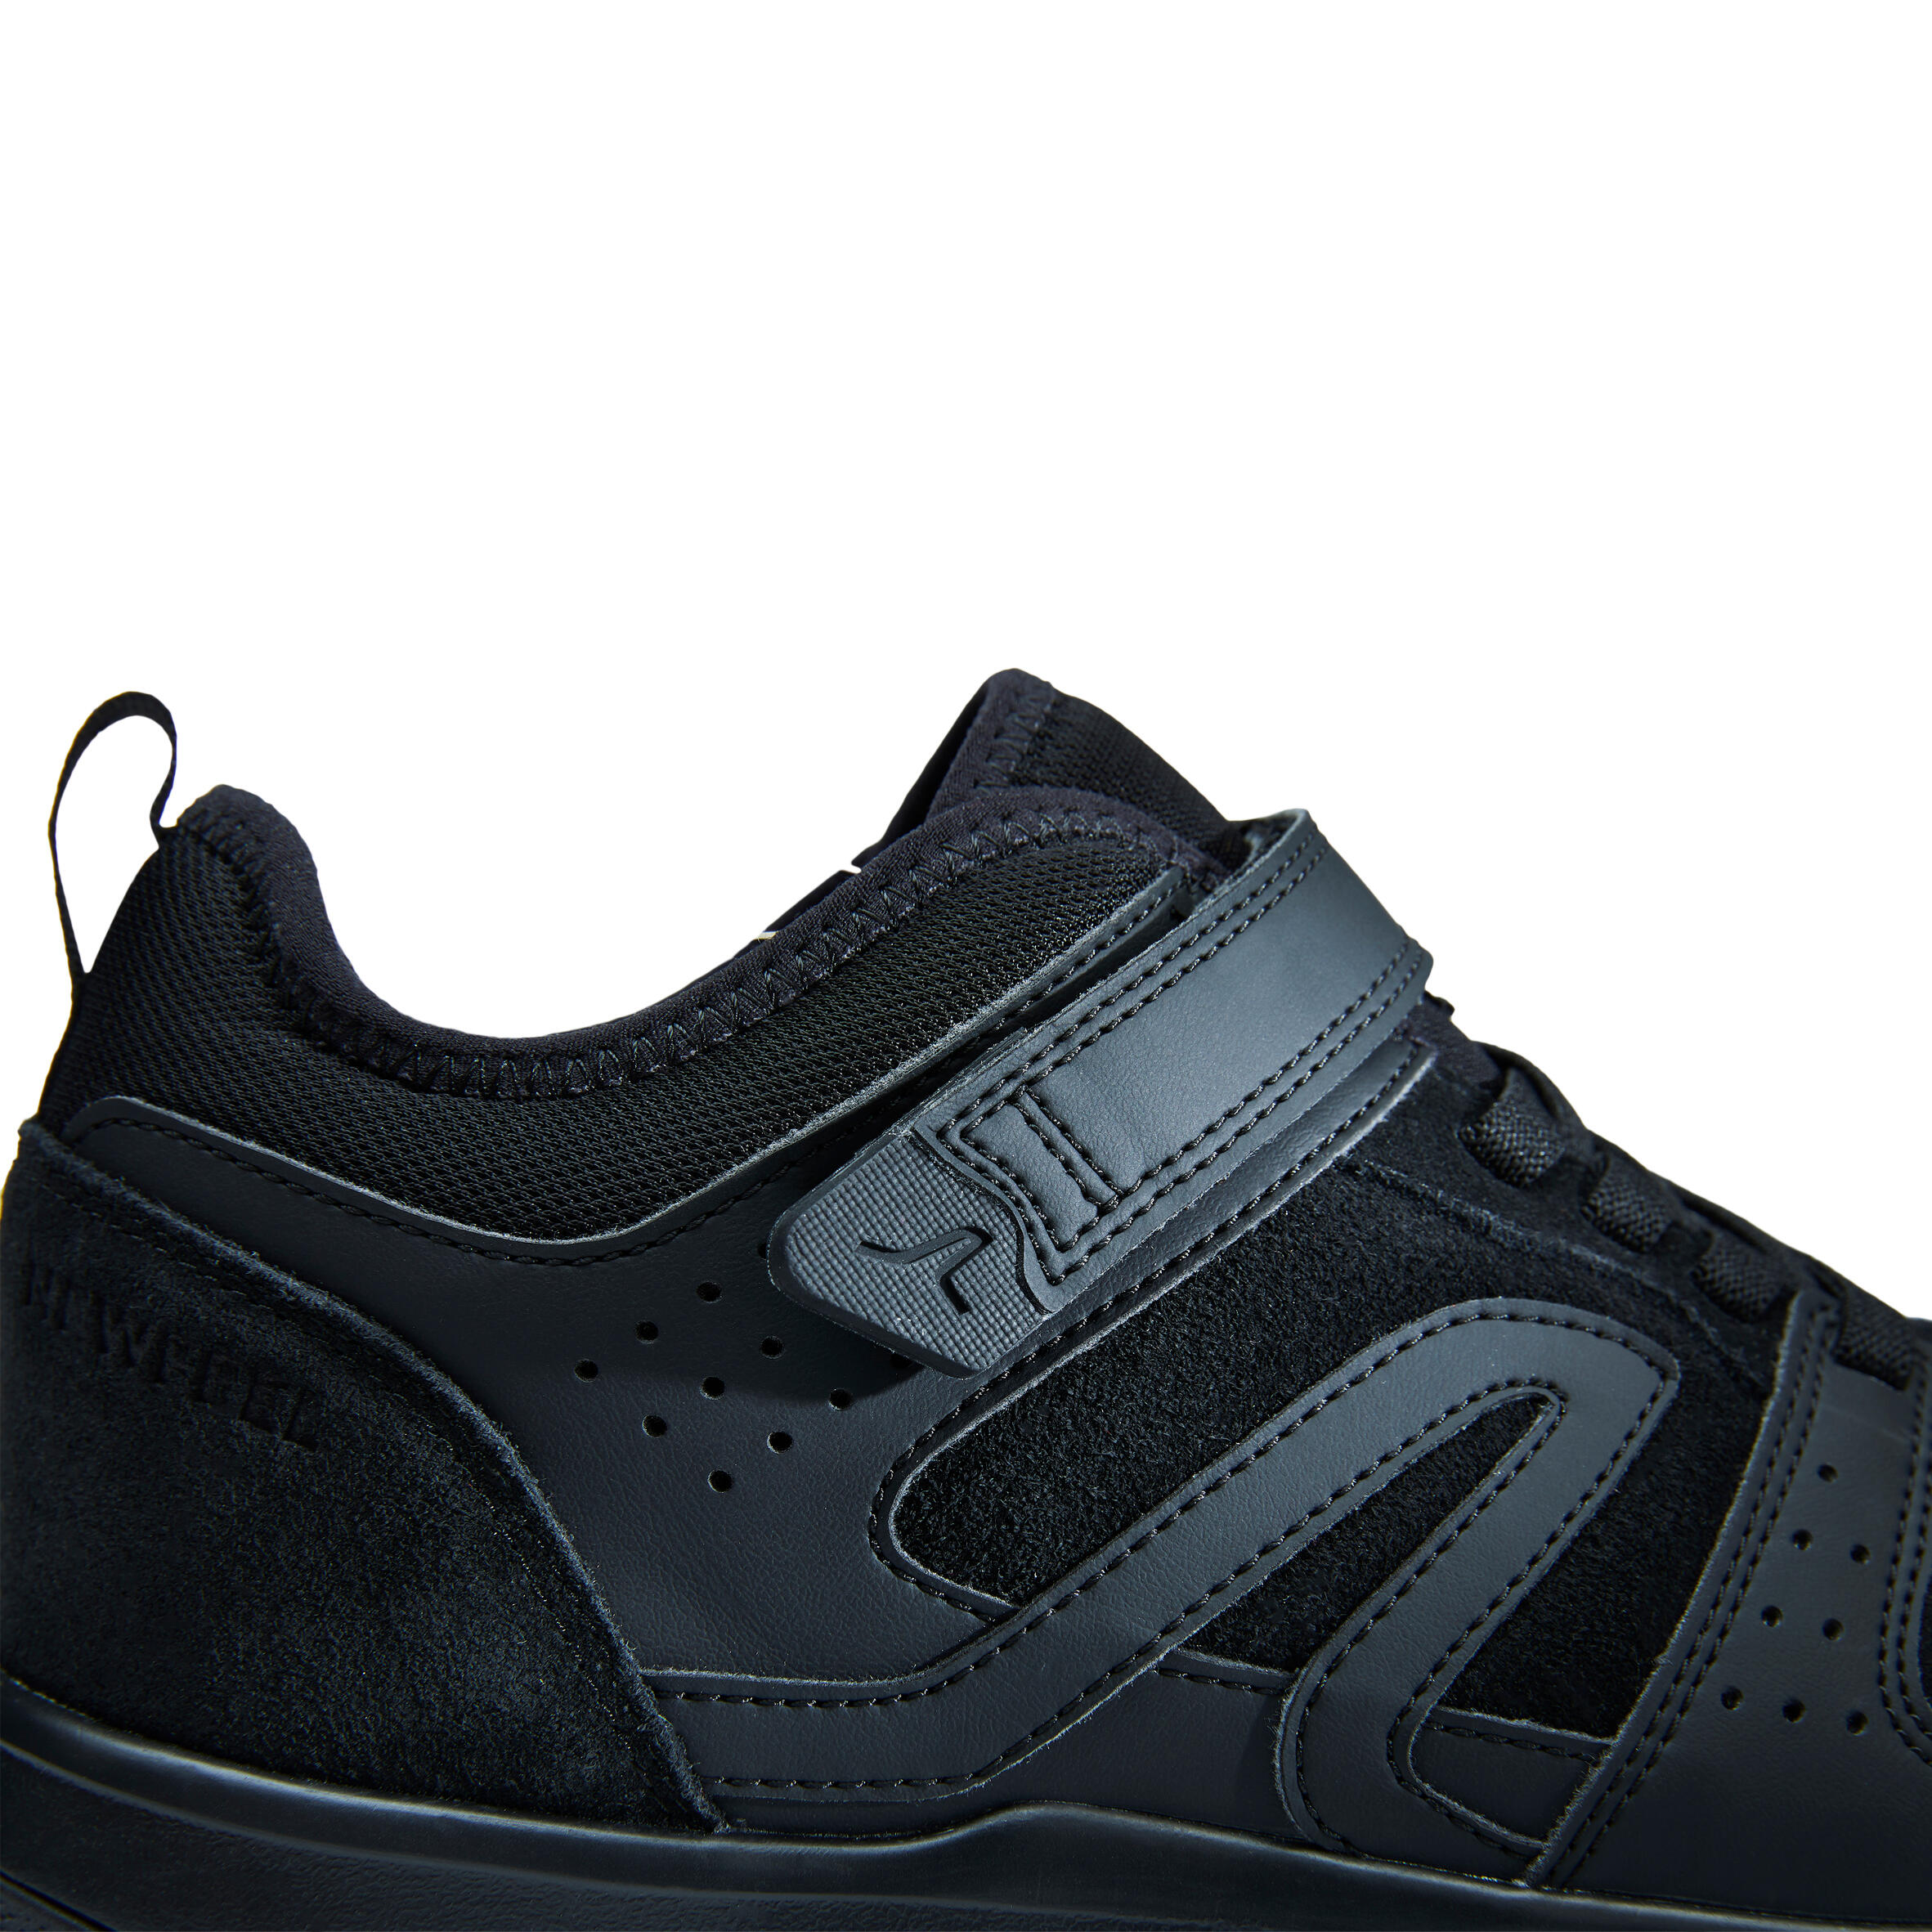 Actiwalk Easy Leather Men's Urban Walking Shoes - Black 11/14